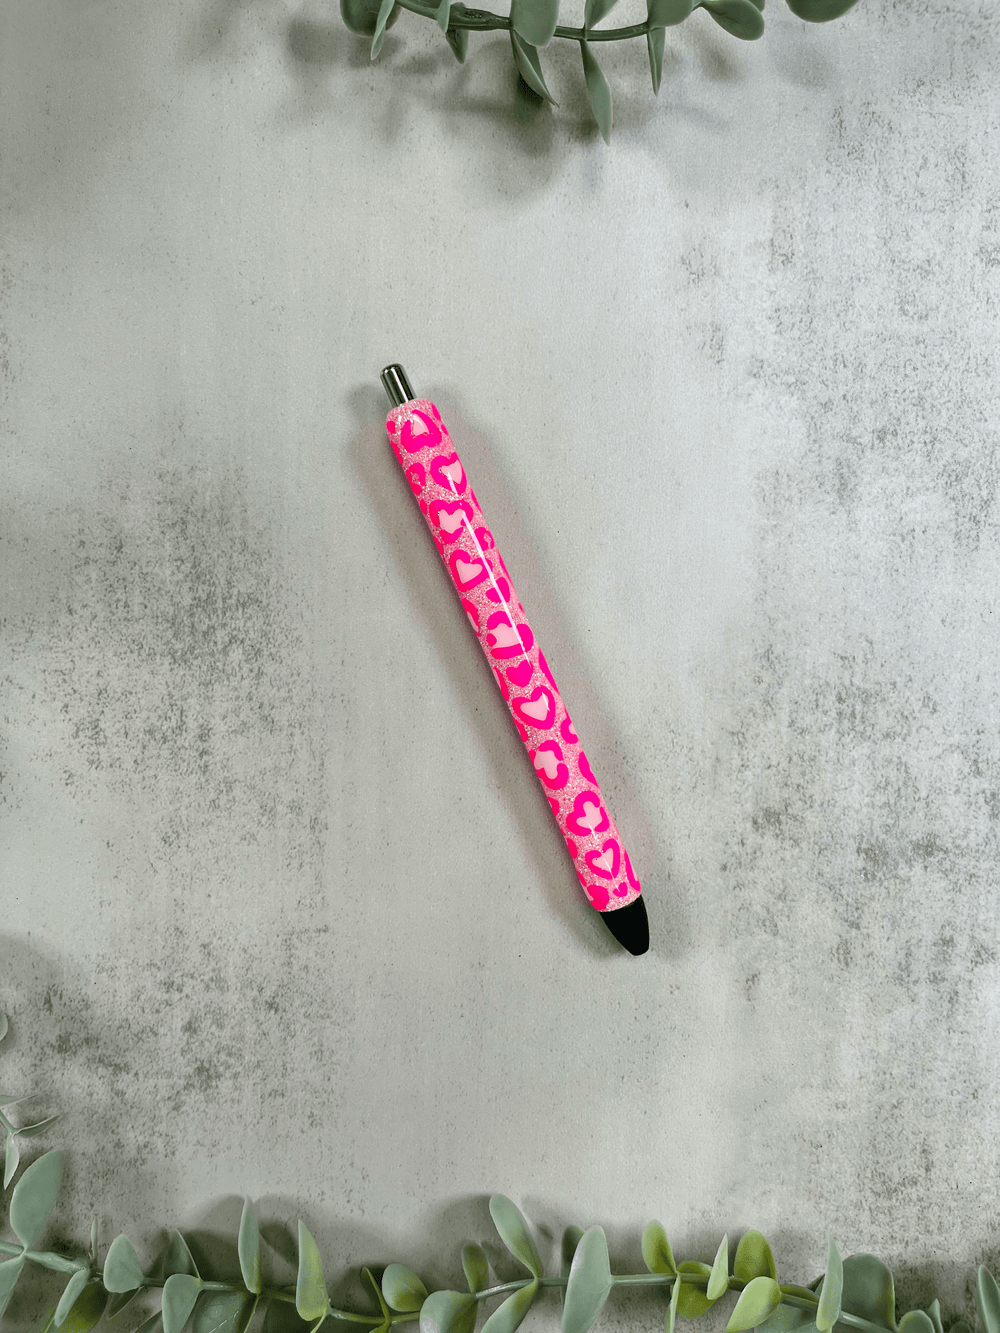 Glitter pens, funny saying pens, patriotic funny pens, gag gift, stock –  K.C.'s Creations Station